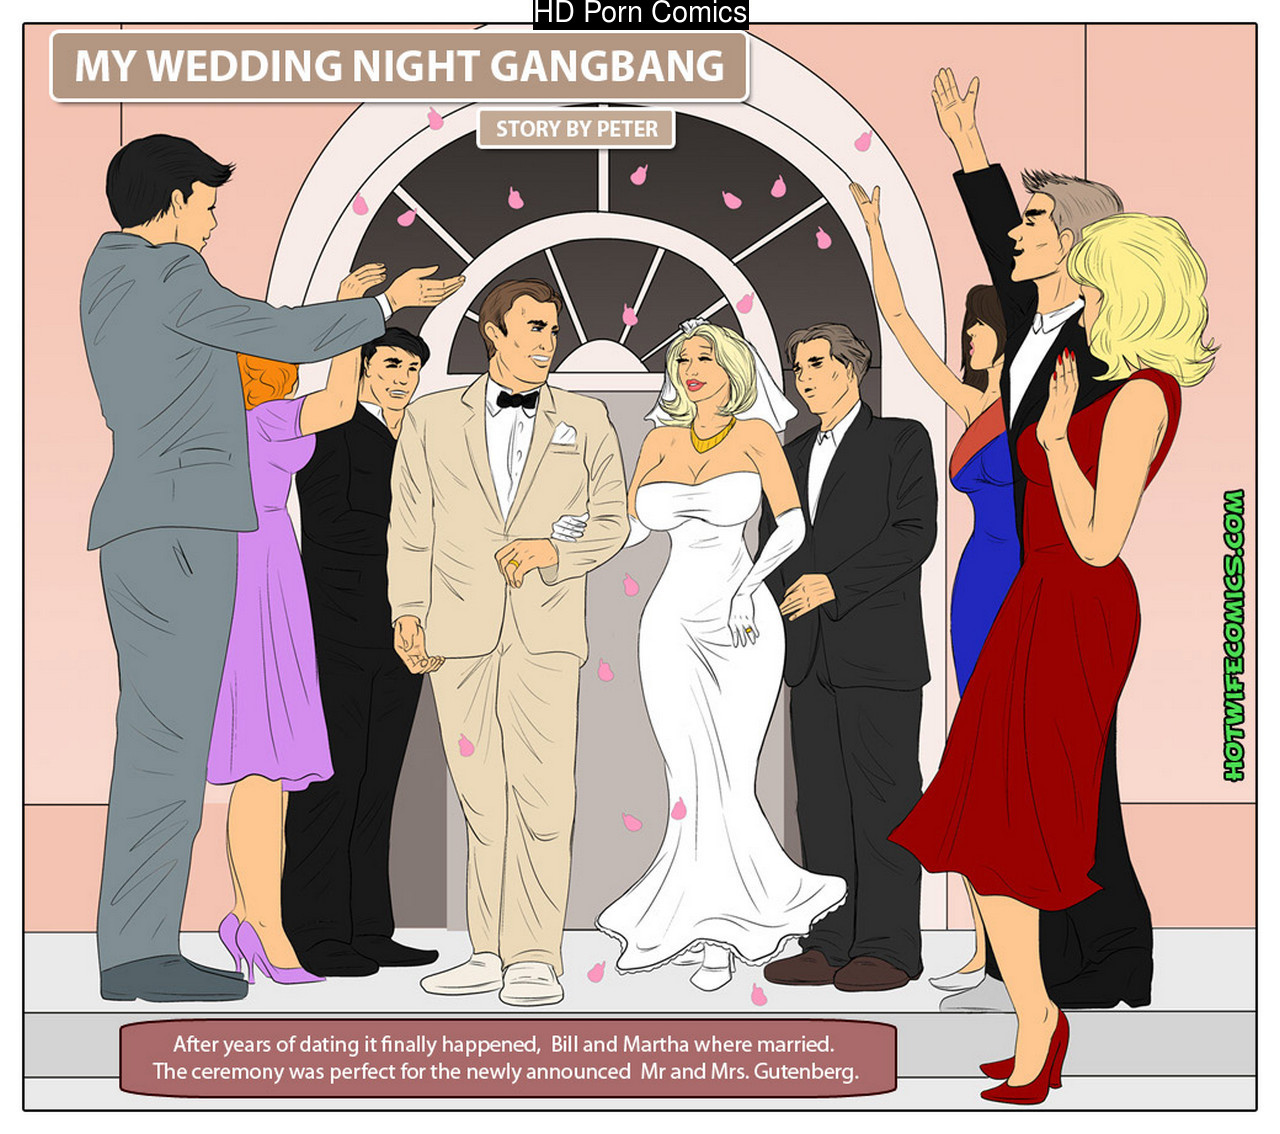 My Wedding Night Gangbang comic porn HD Porn Comics pic picture